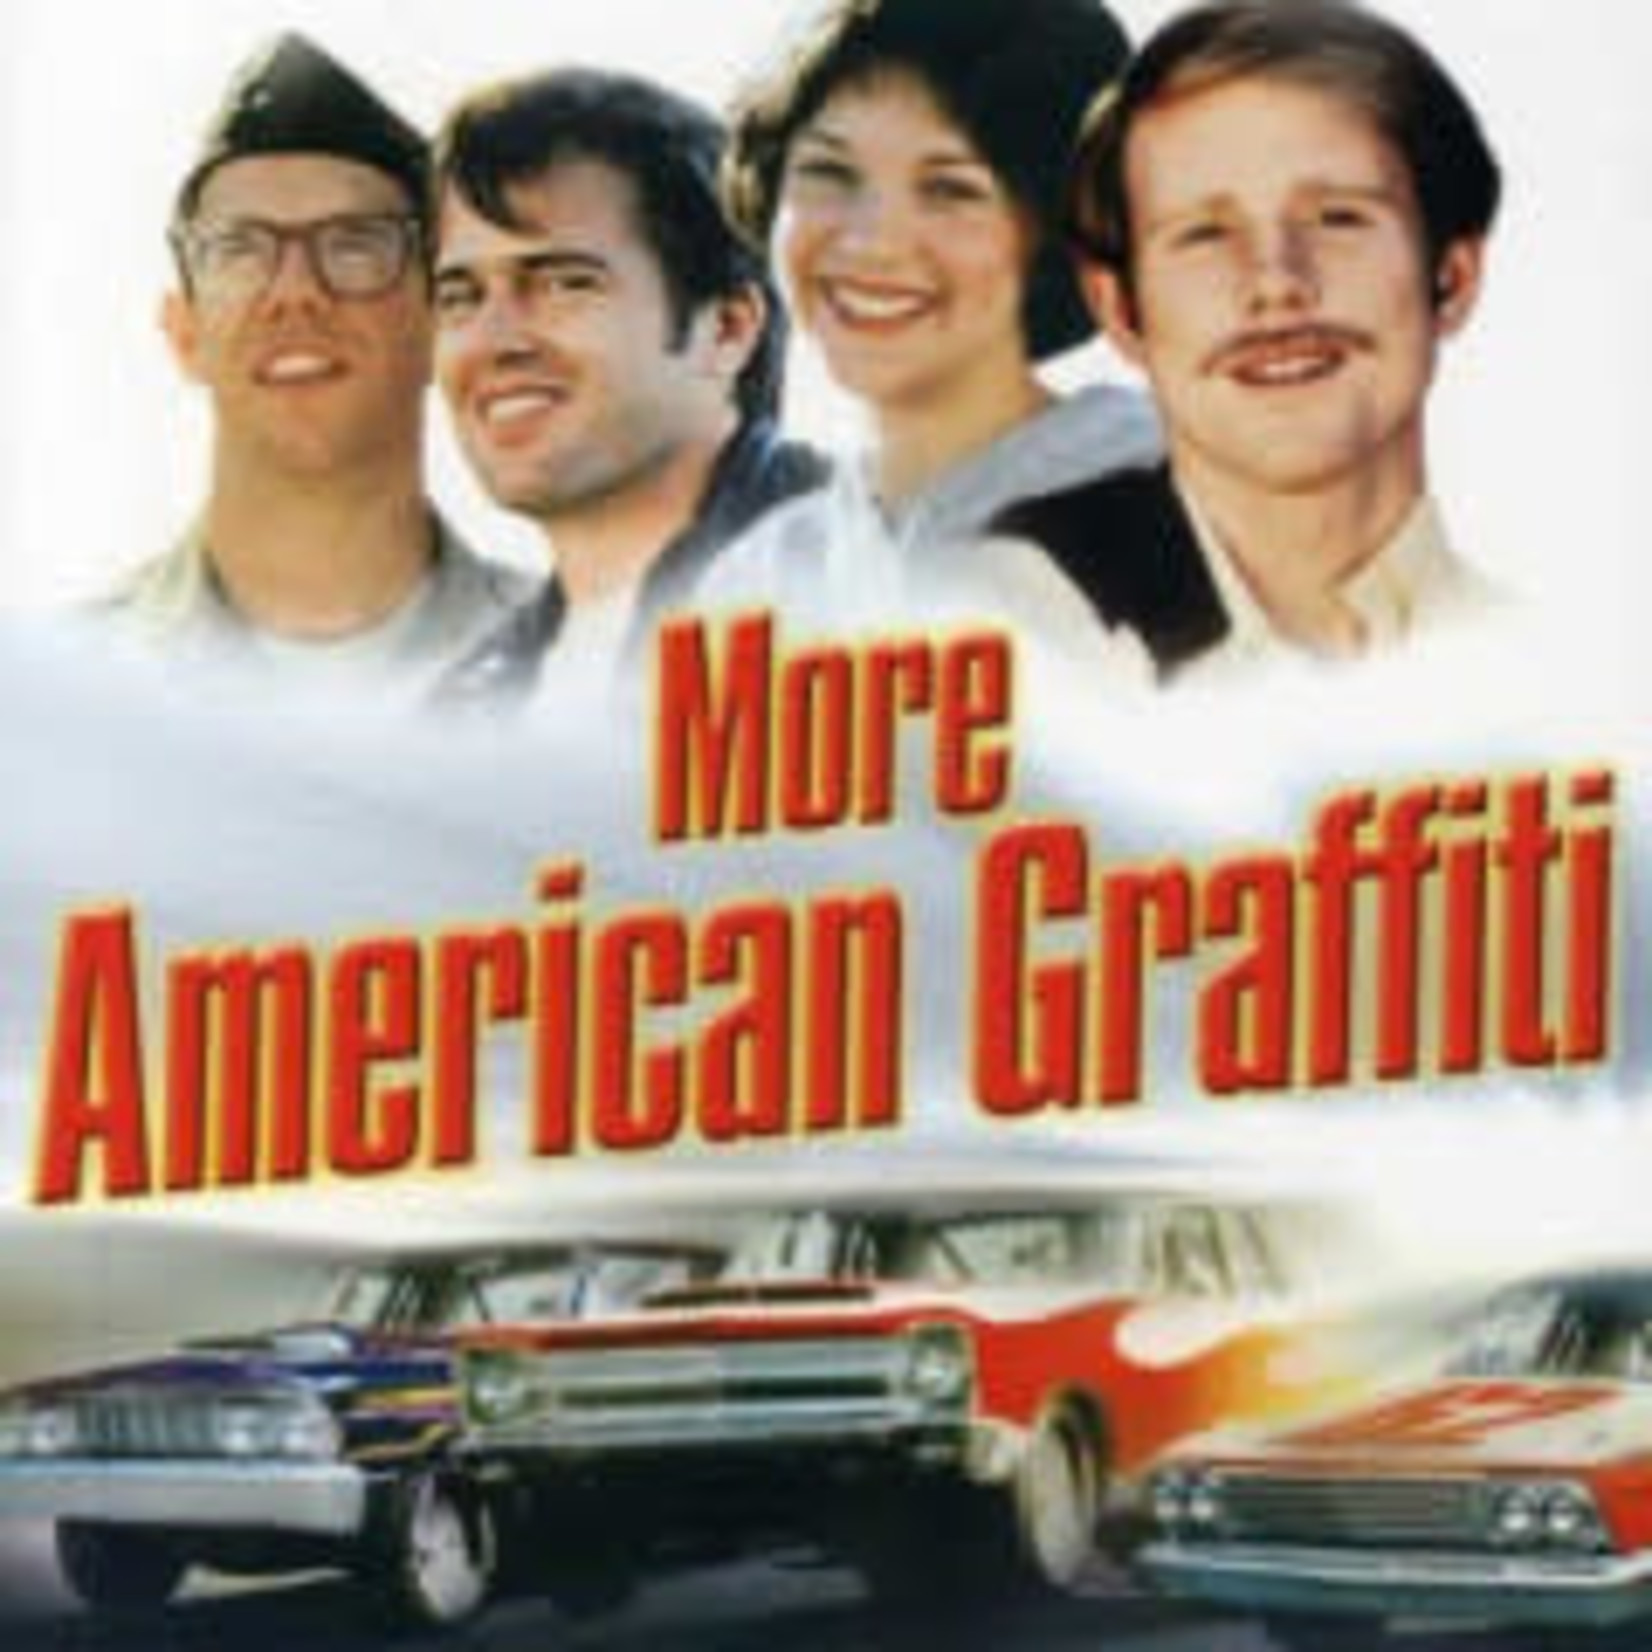 American Graffiti 2: More American Graffiti [USED DVD]